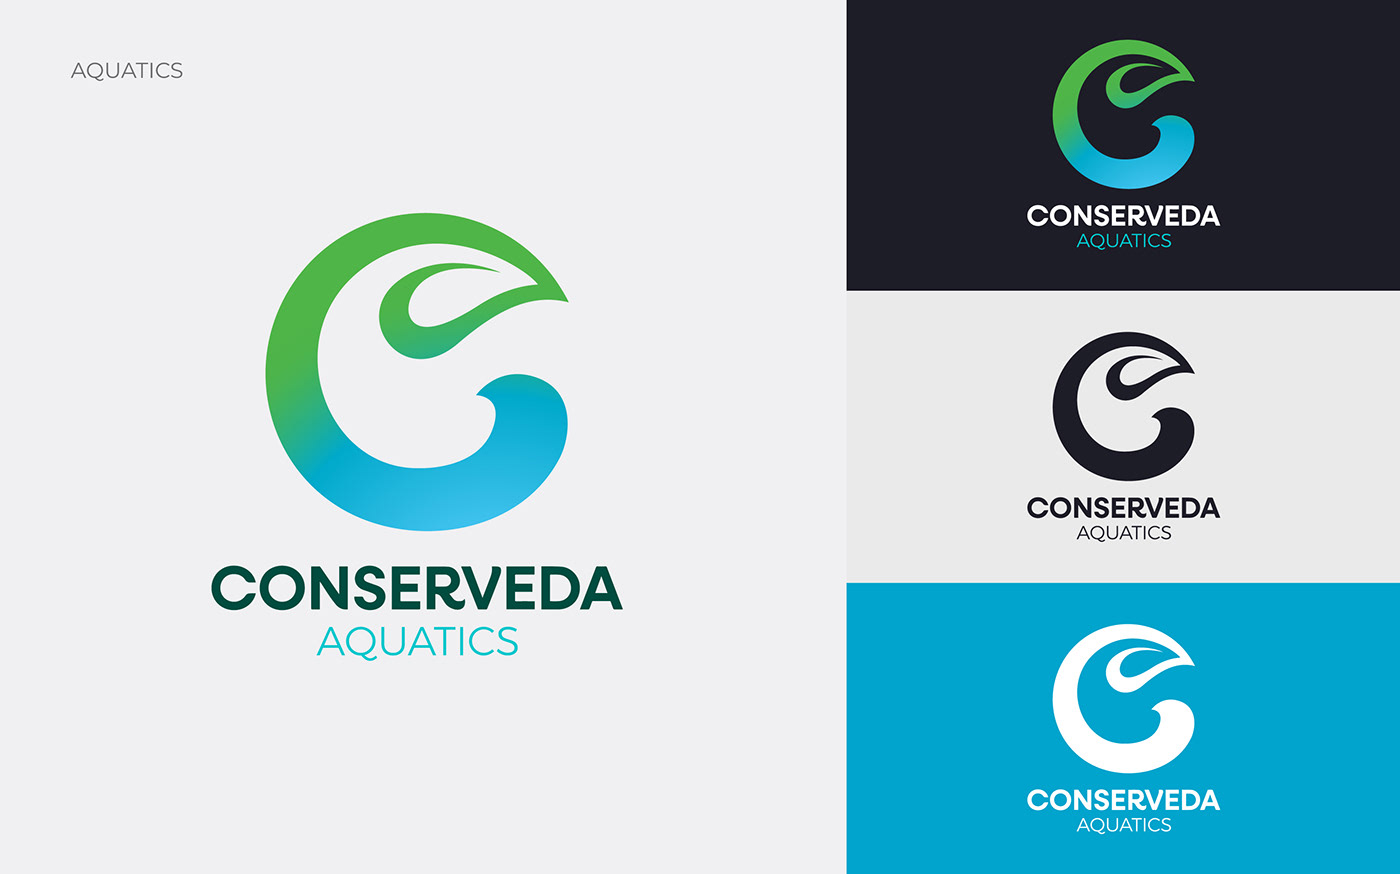 Logo Design brand identity visual identity Brand Design logo identity brand logos EcoFriendlyproducts design